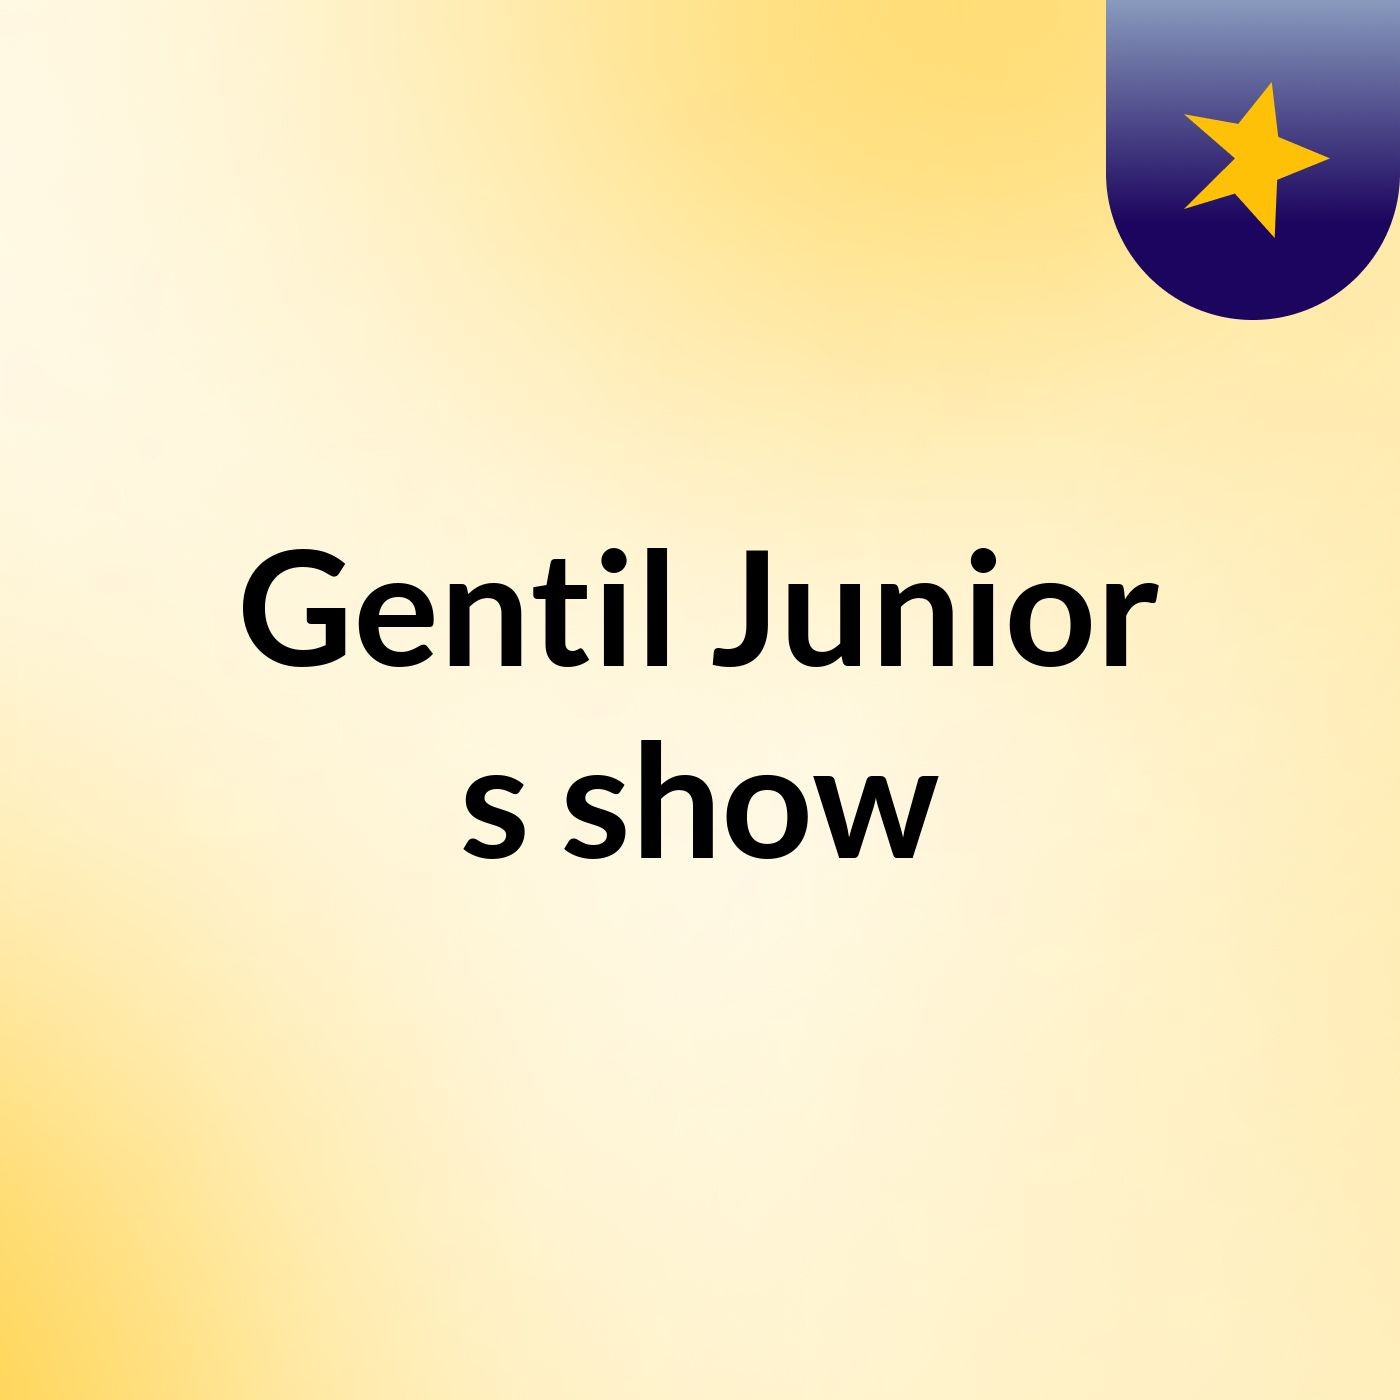 Gentil Junior's show